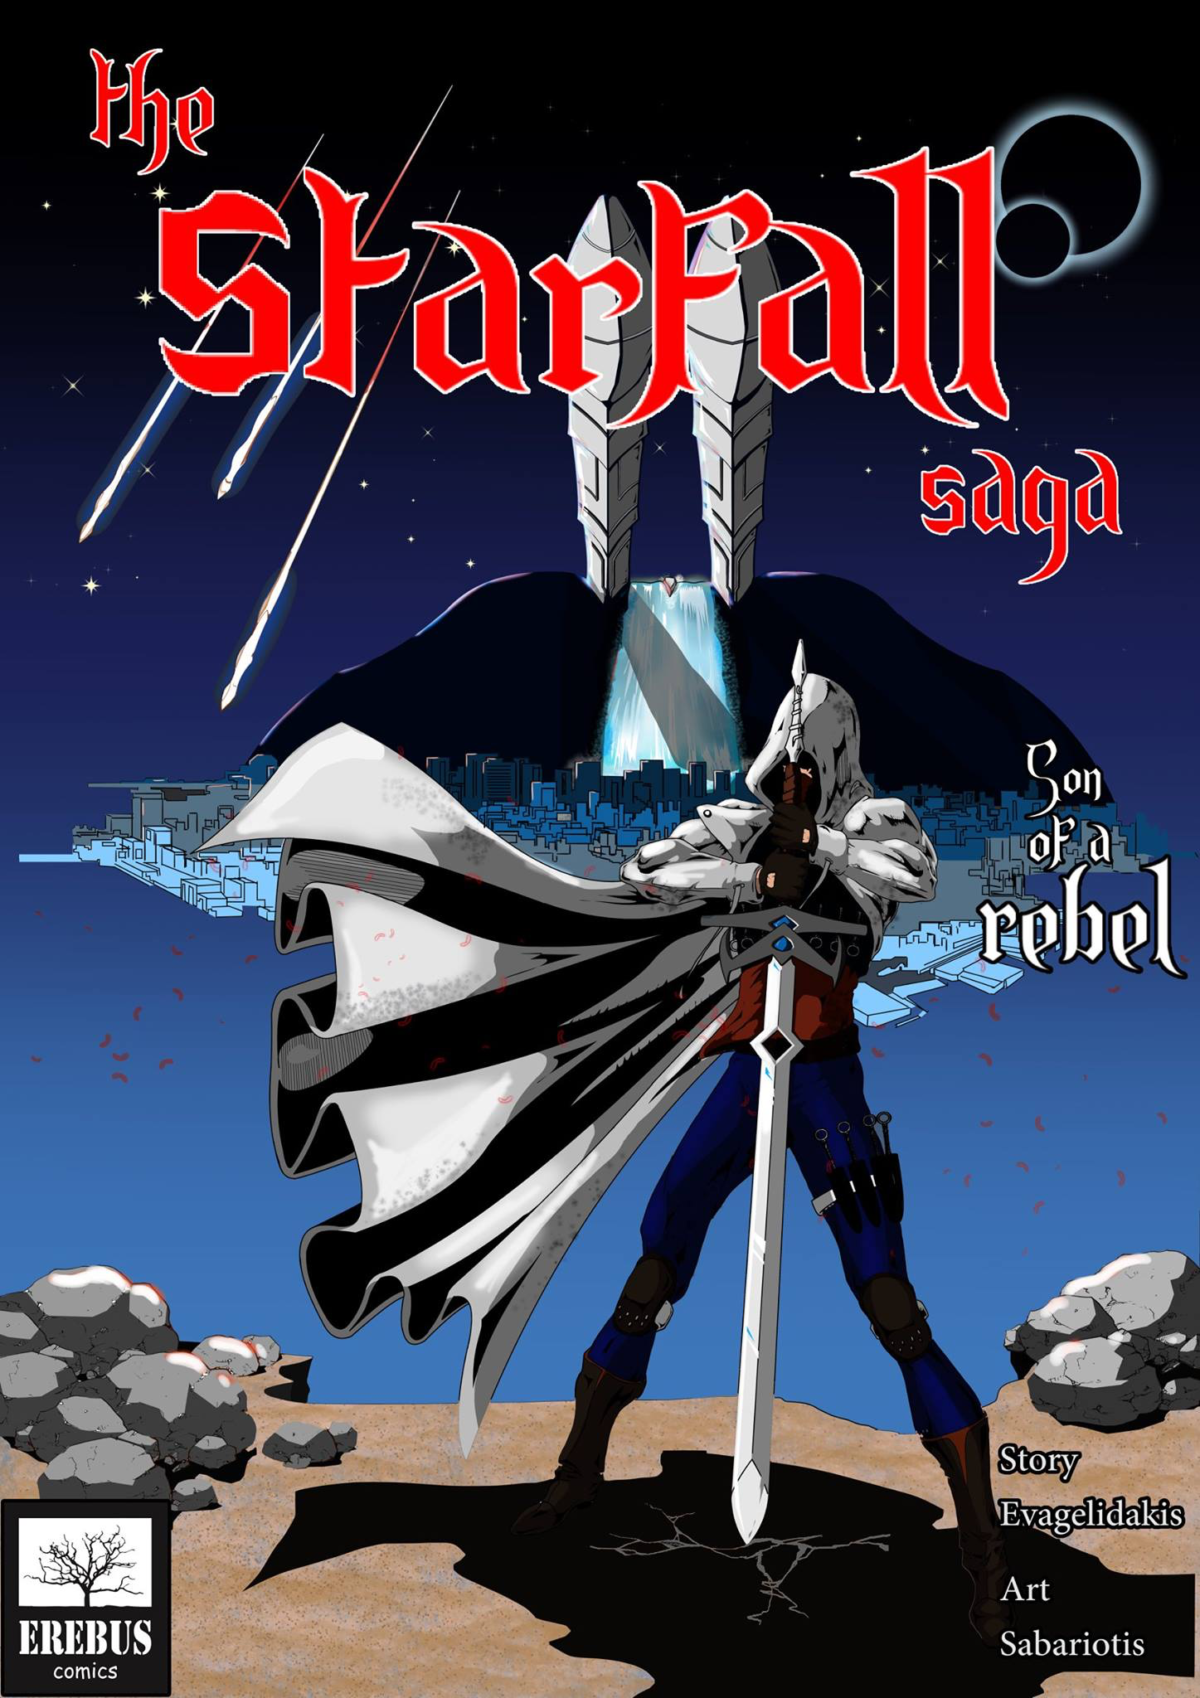 The Starfall saga is a post apocalyptic actiondrama comic.